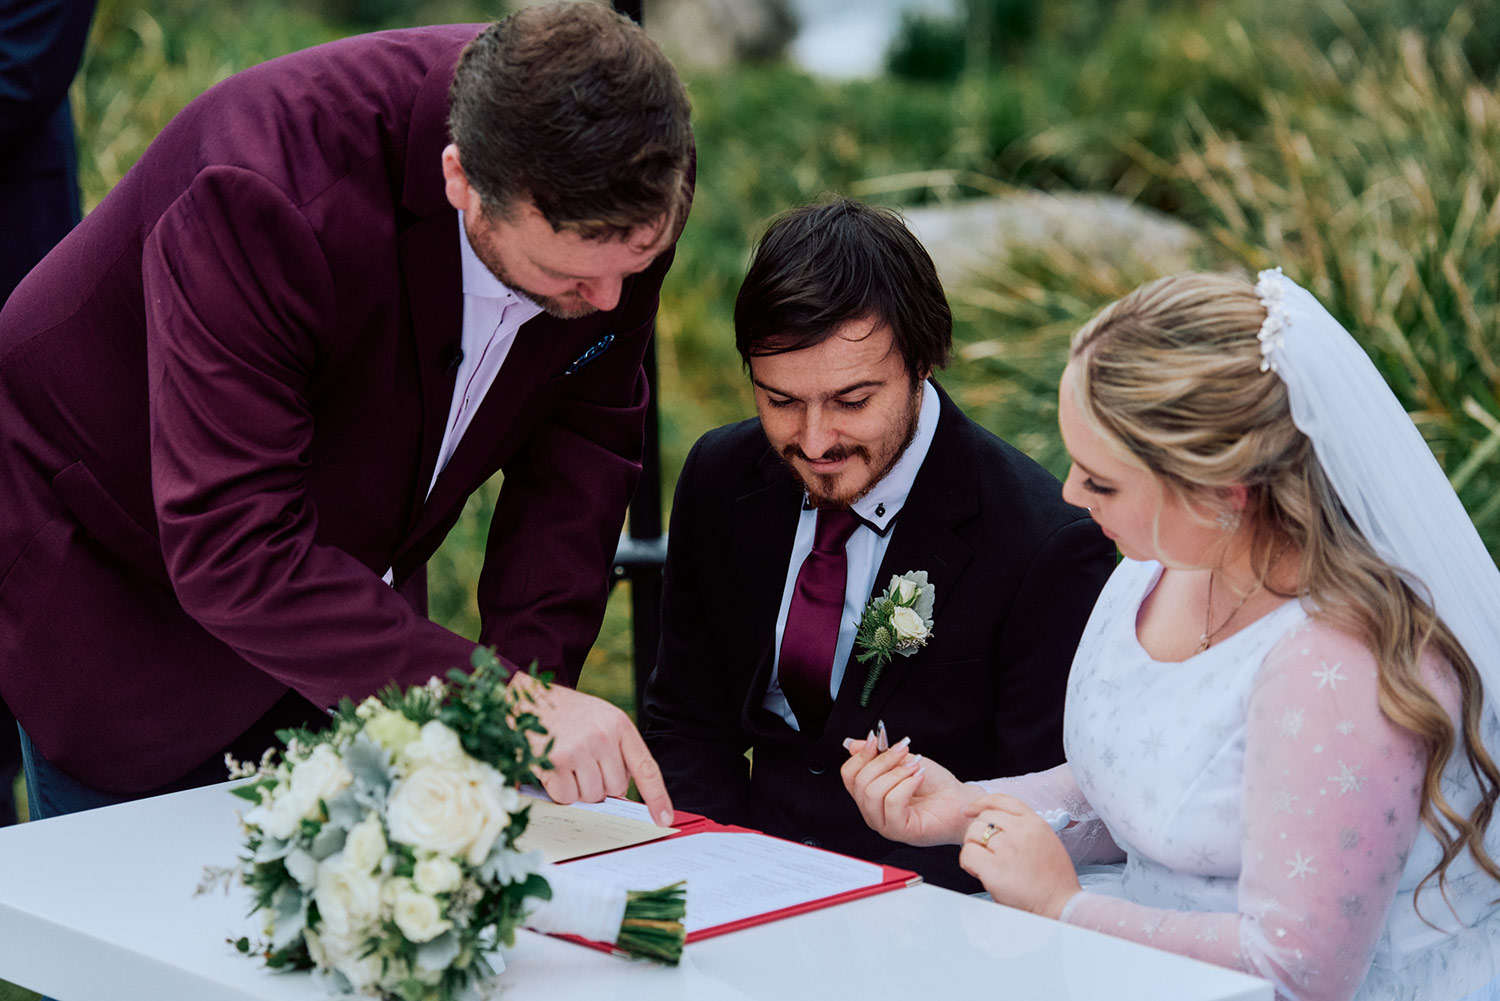 Signing the wedding register at Q Station